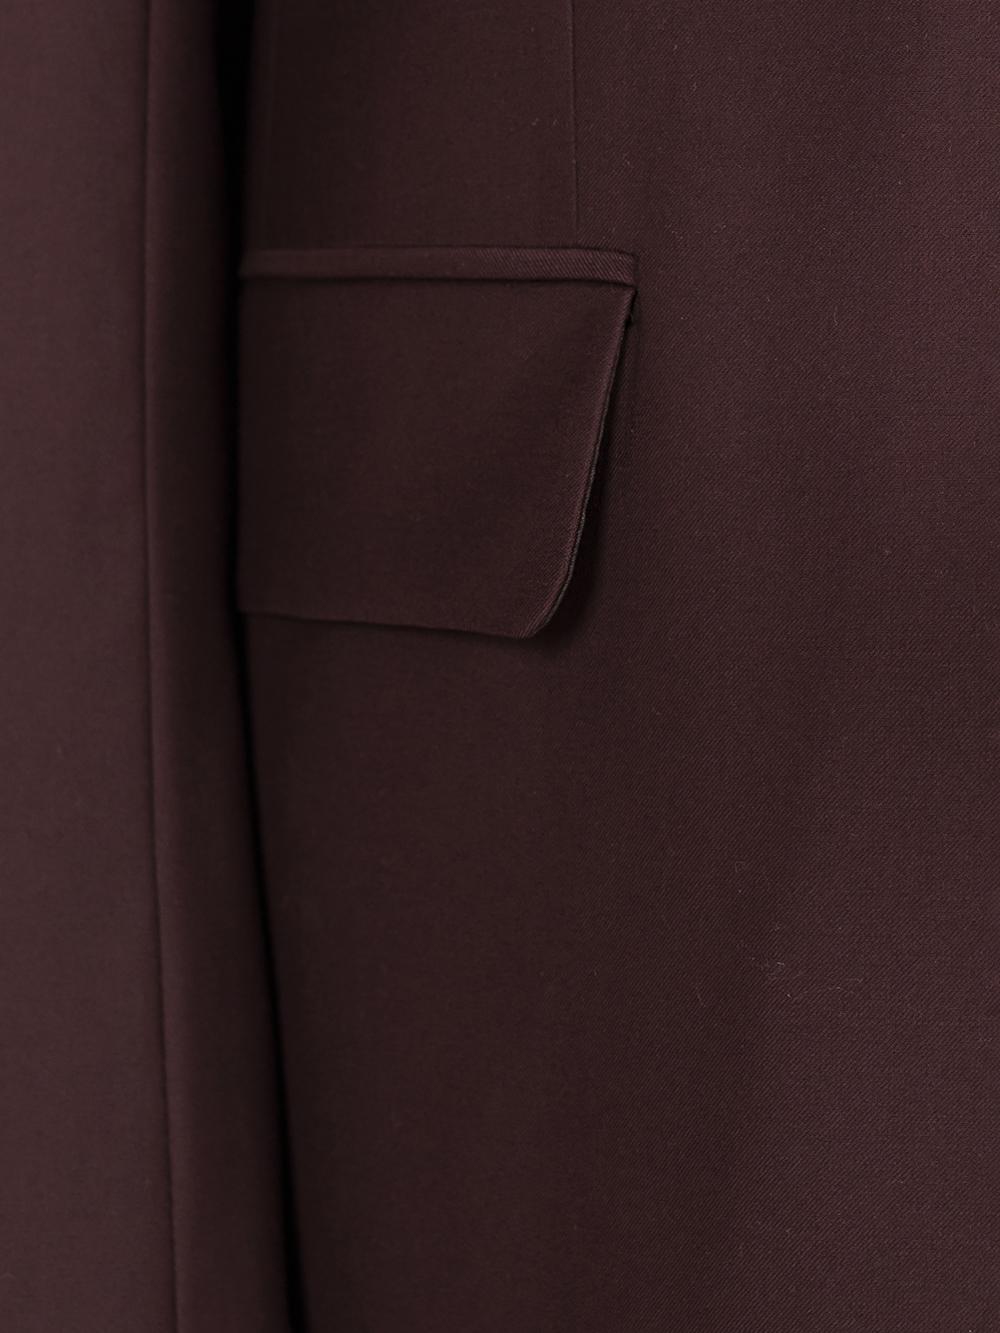 Callahan Brown Set Blazer Linen Suit